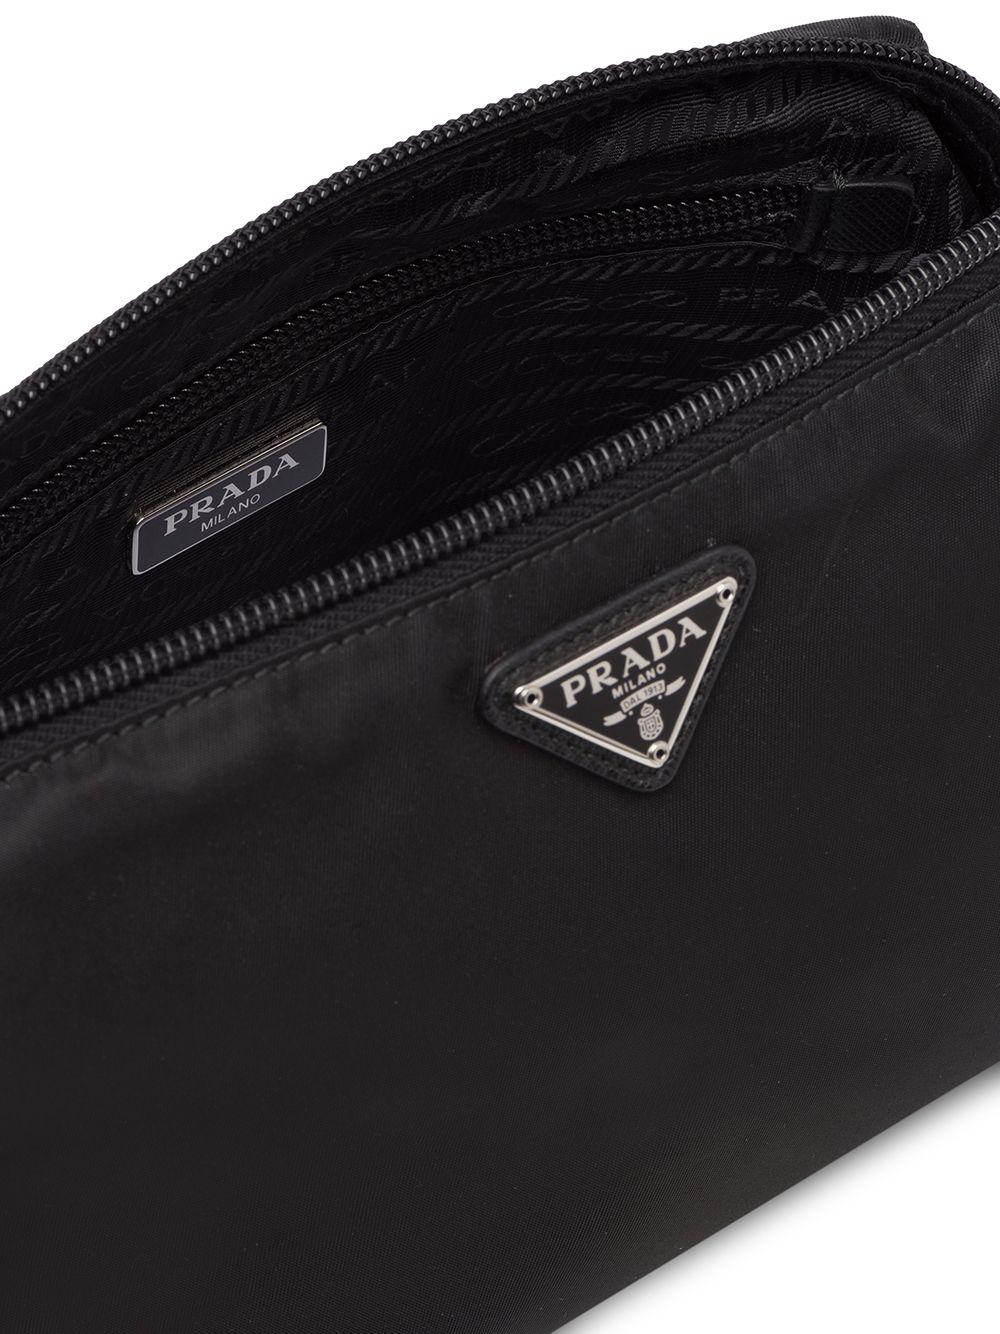 Prada Wristlet Beauty Bag in Nero (Black) - Save 30% | Lyst